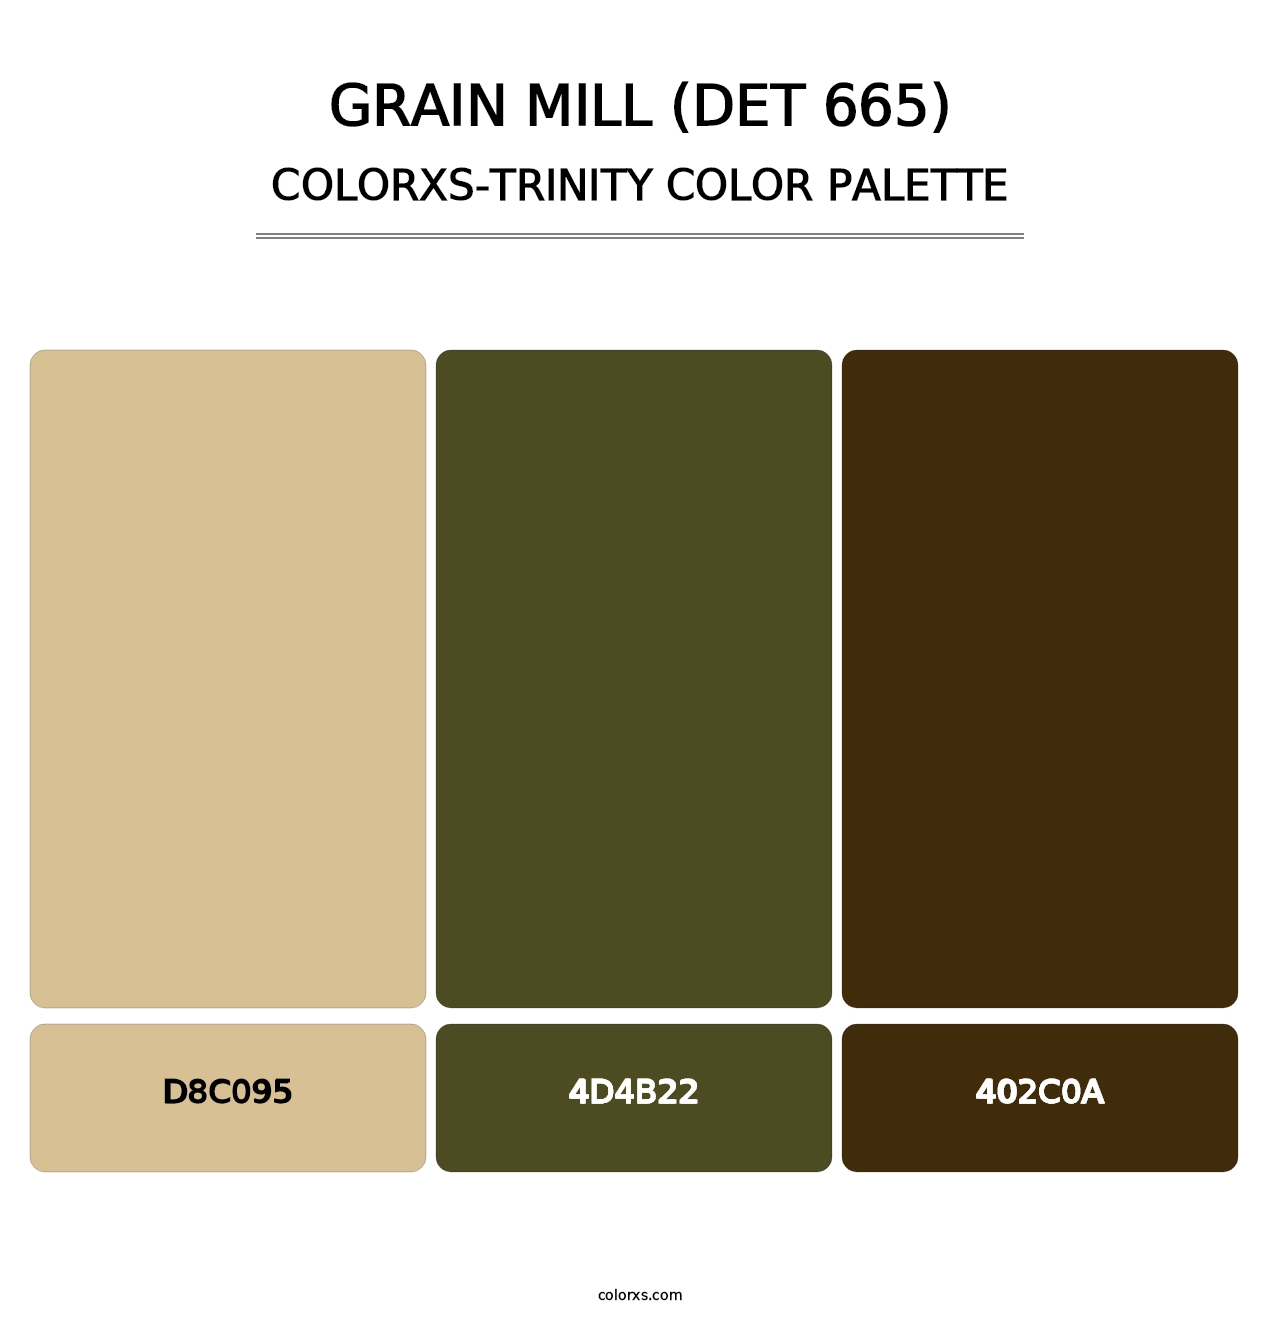 Grain Mill (DET 665) - Colorxs Trinity Palette